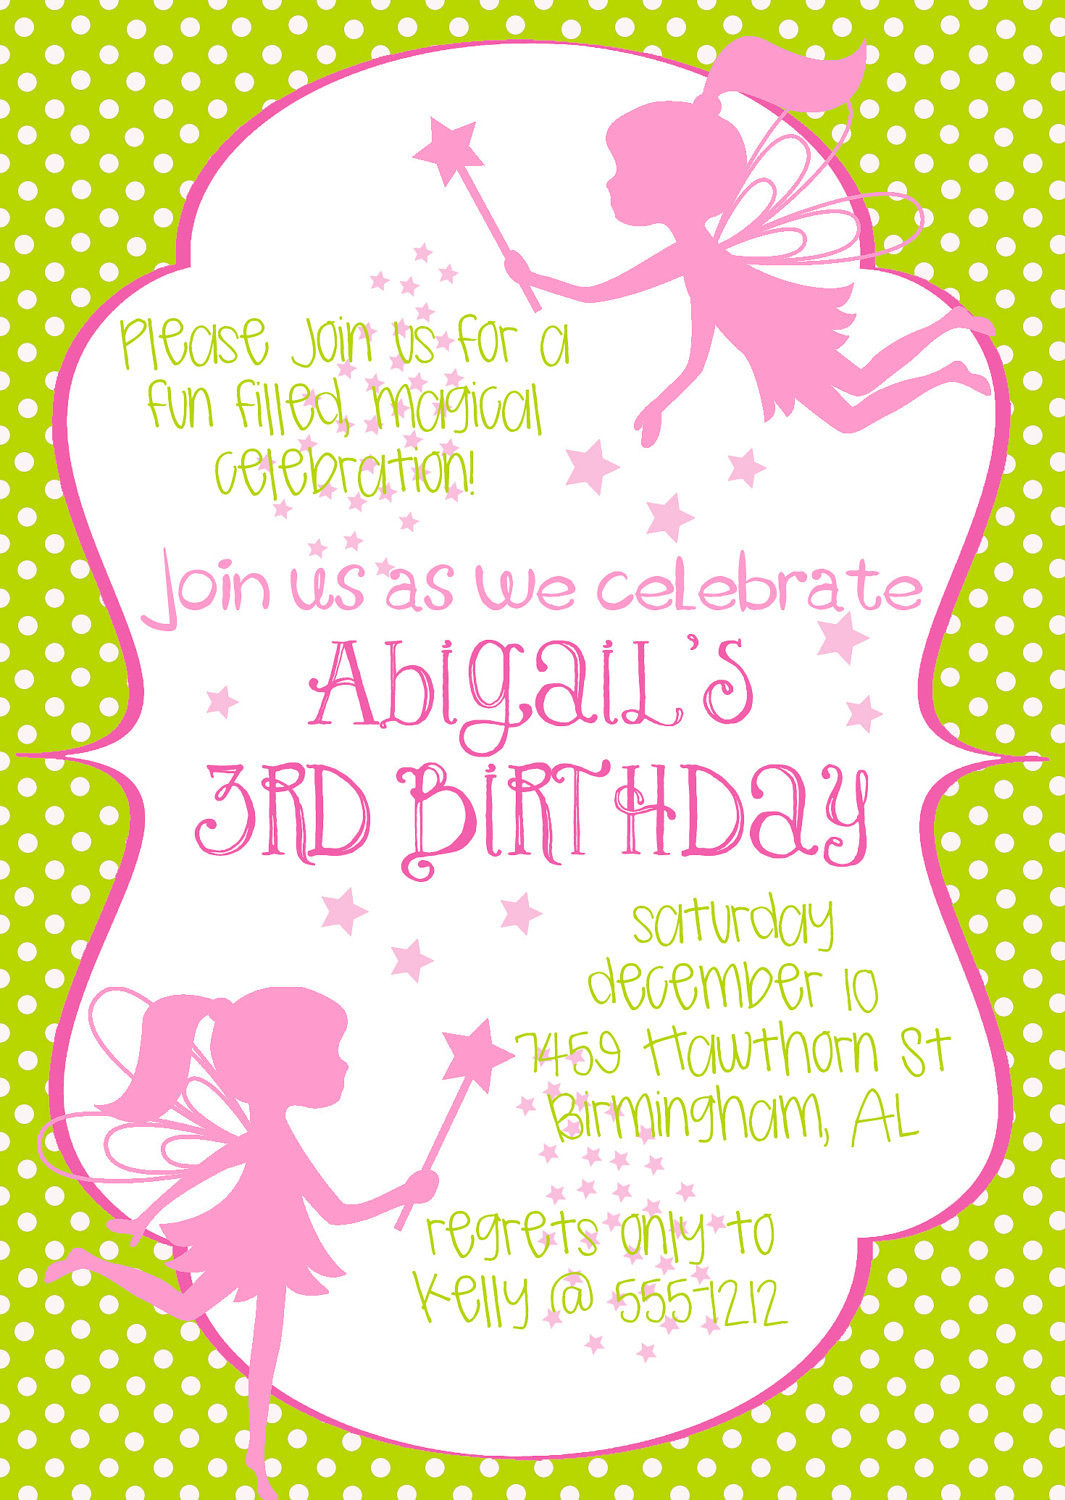 Princess Birthday Party Invitations
 Fairy Princess Birthday Party Invitation in by